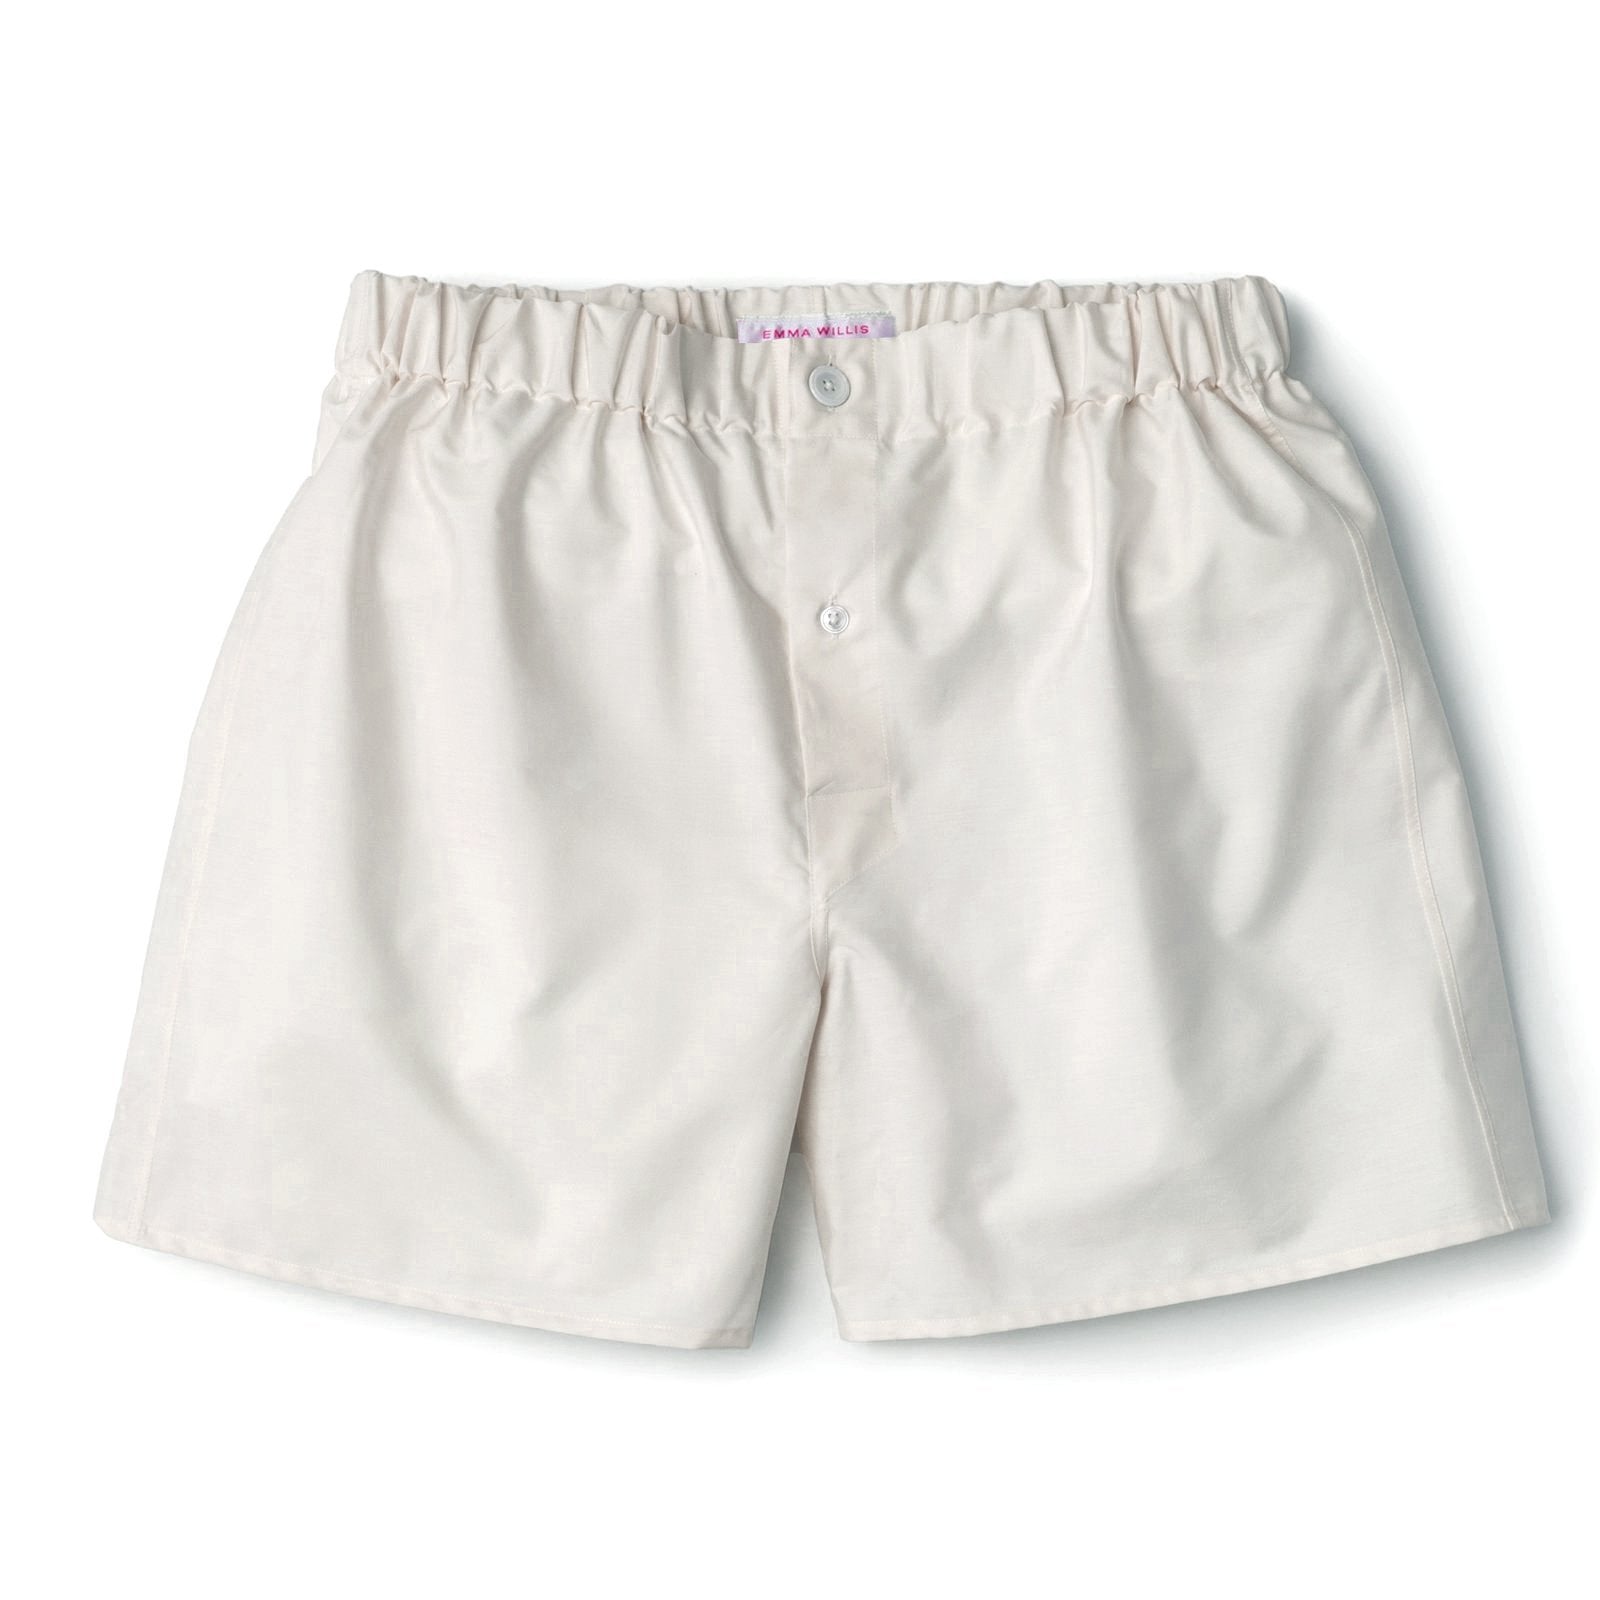 Ivory Superior Cotton Boxer Shorts - Slim Fit - New - Emma Willis